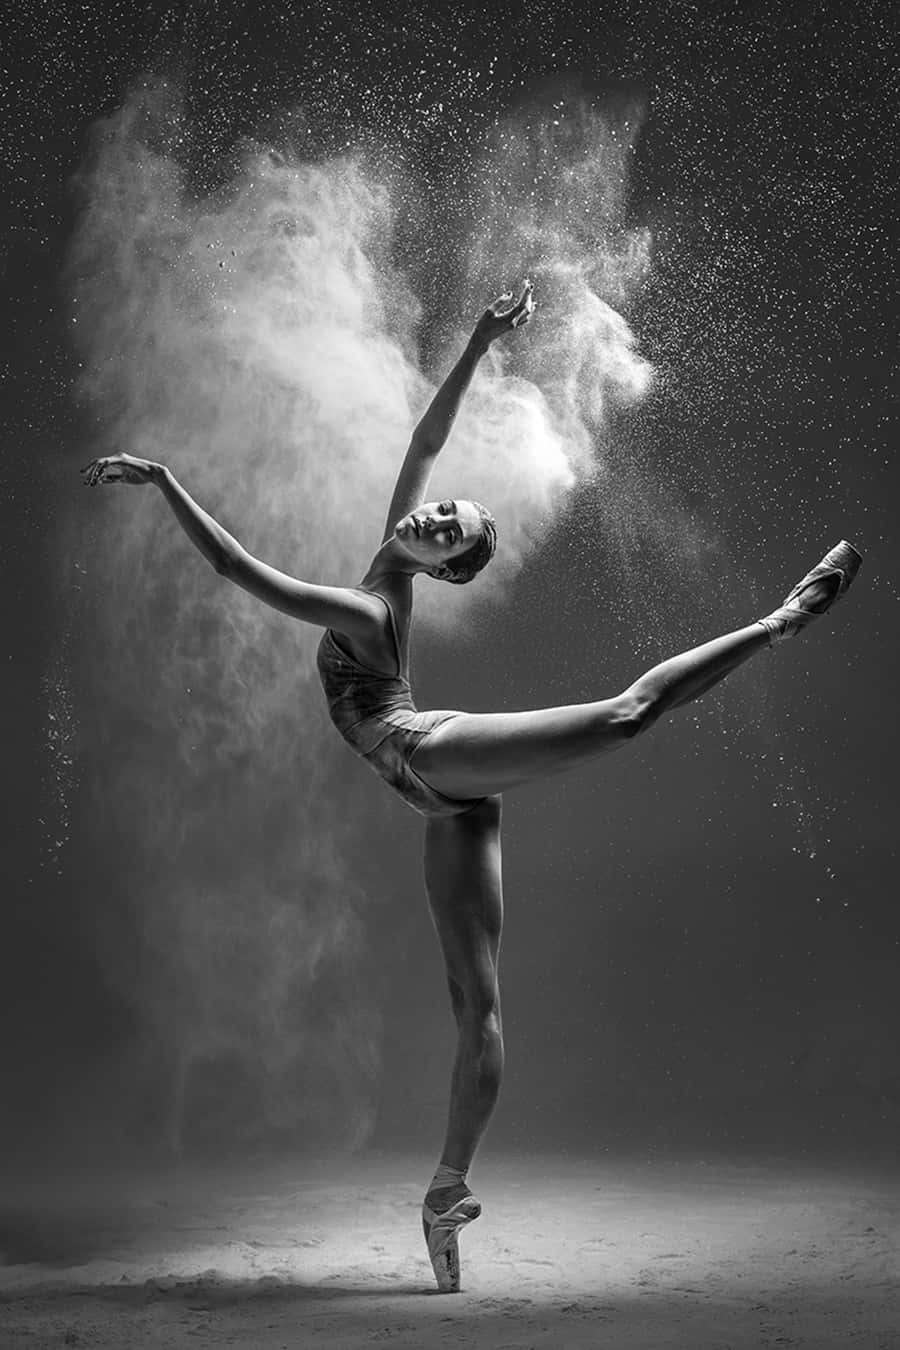 Caption: Graceful Ballet In Monochrome